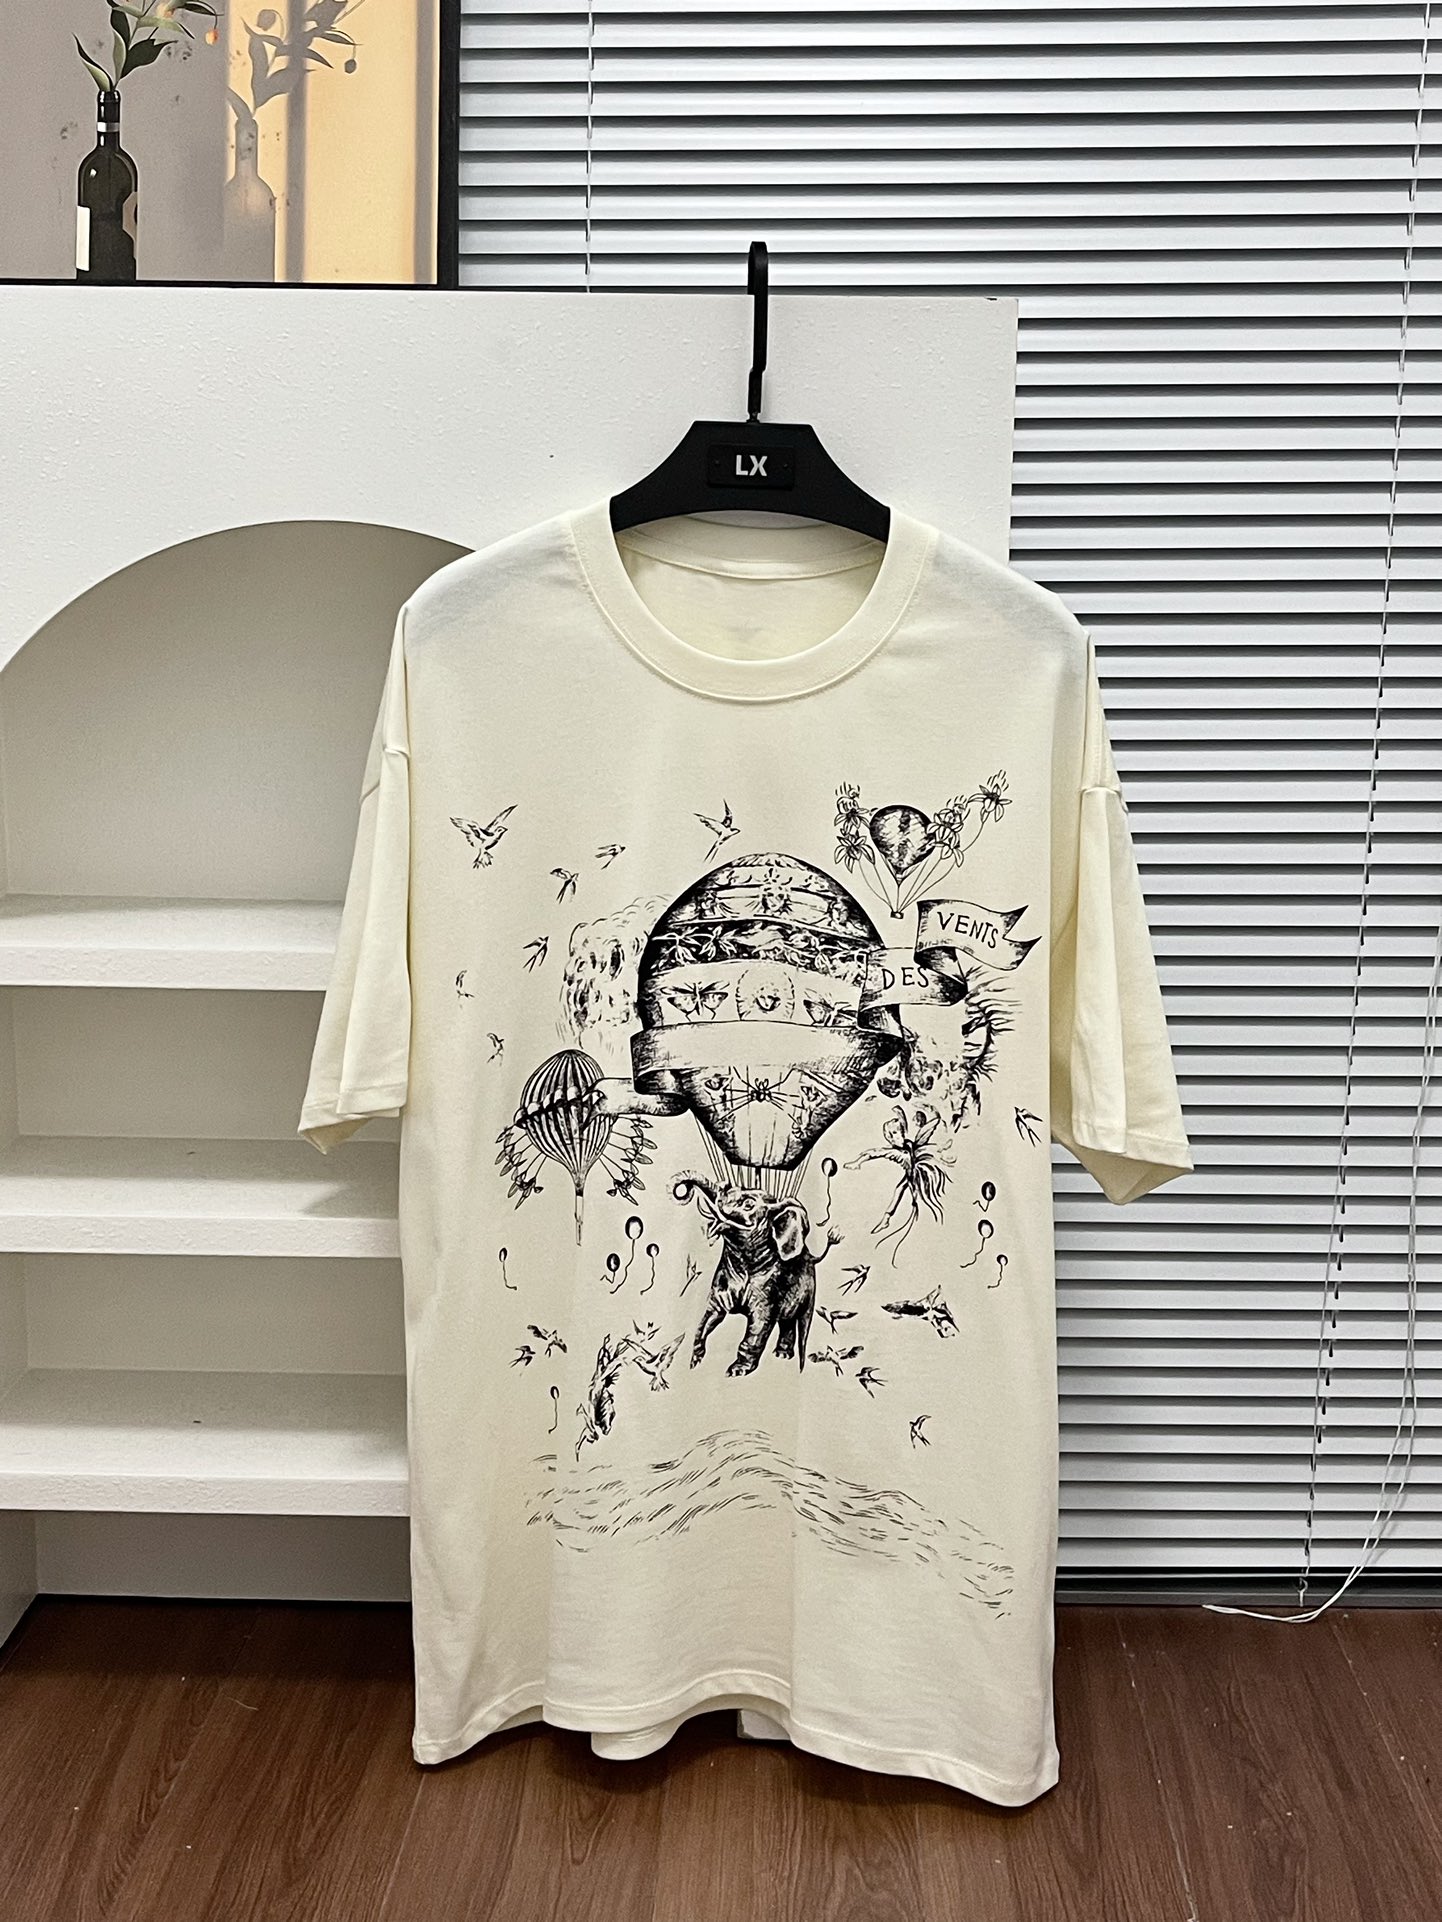 Dior Clothing T-Shirt